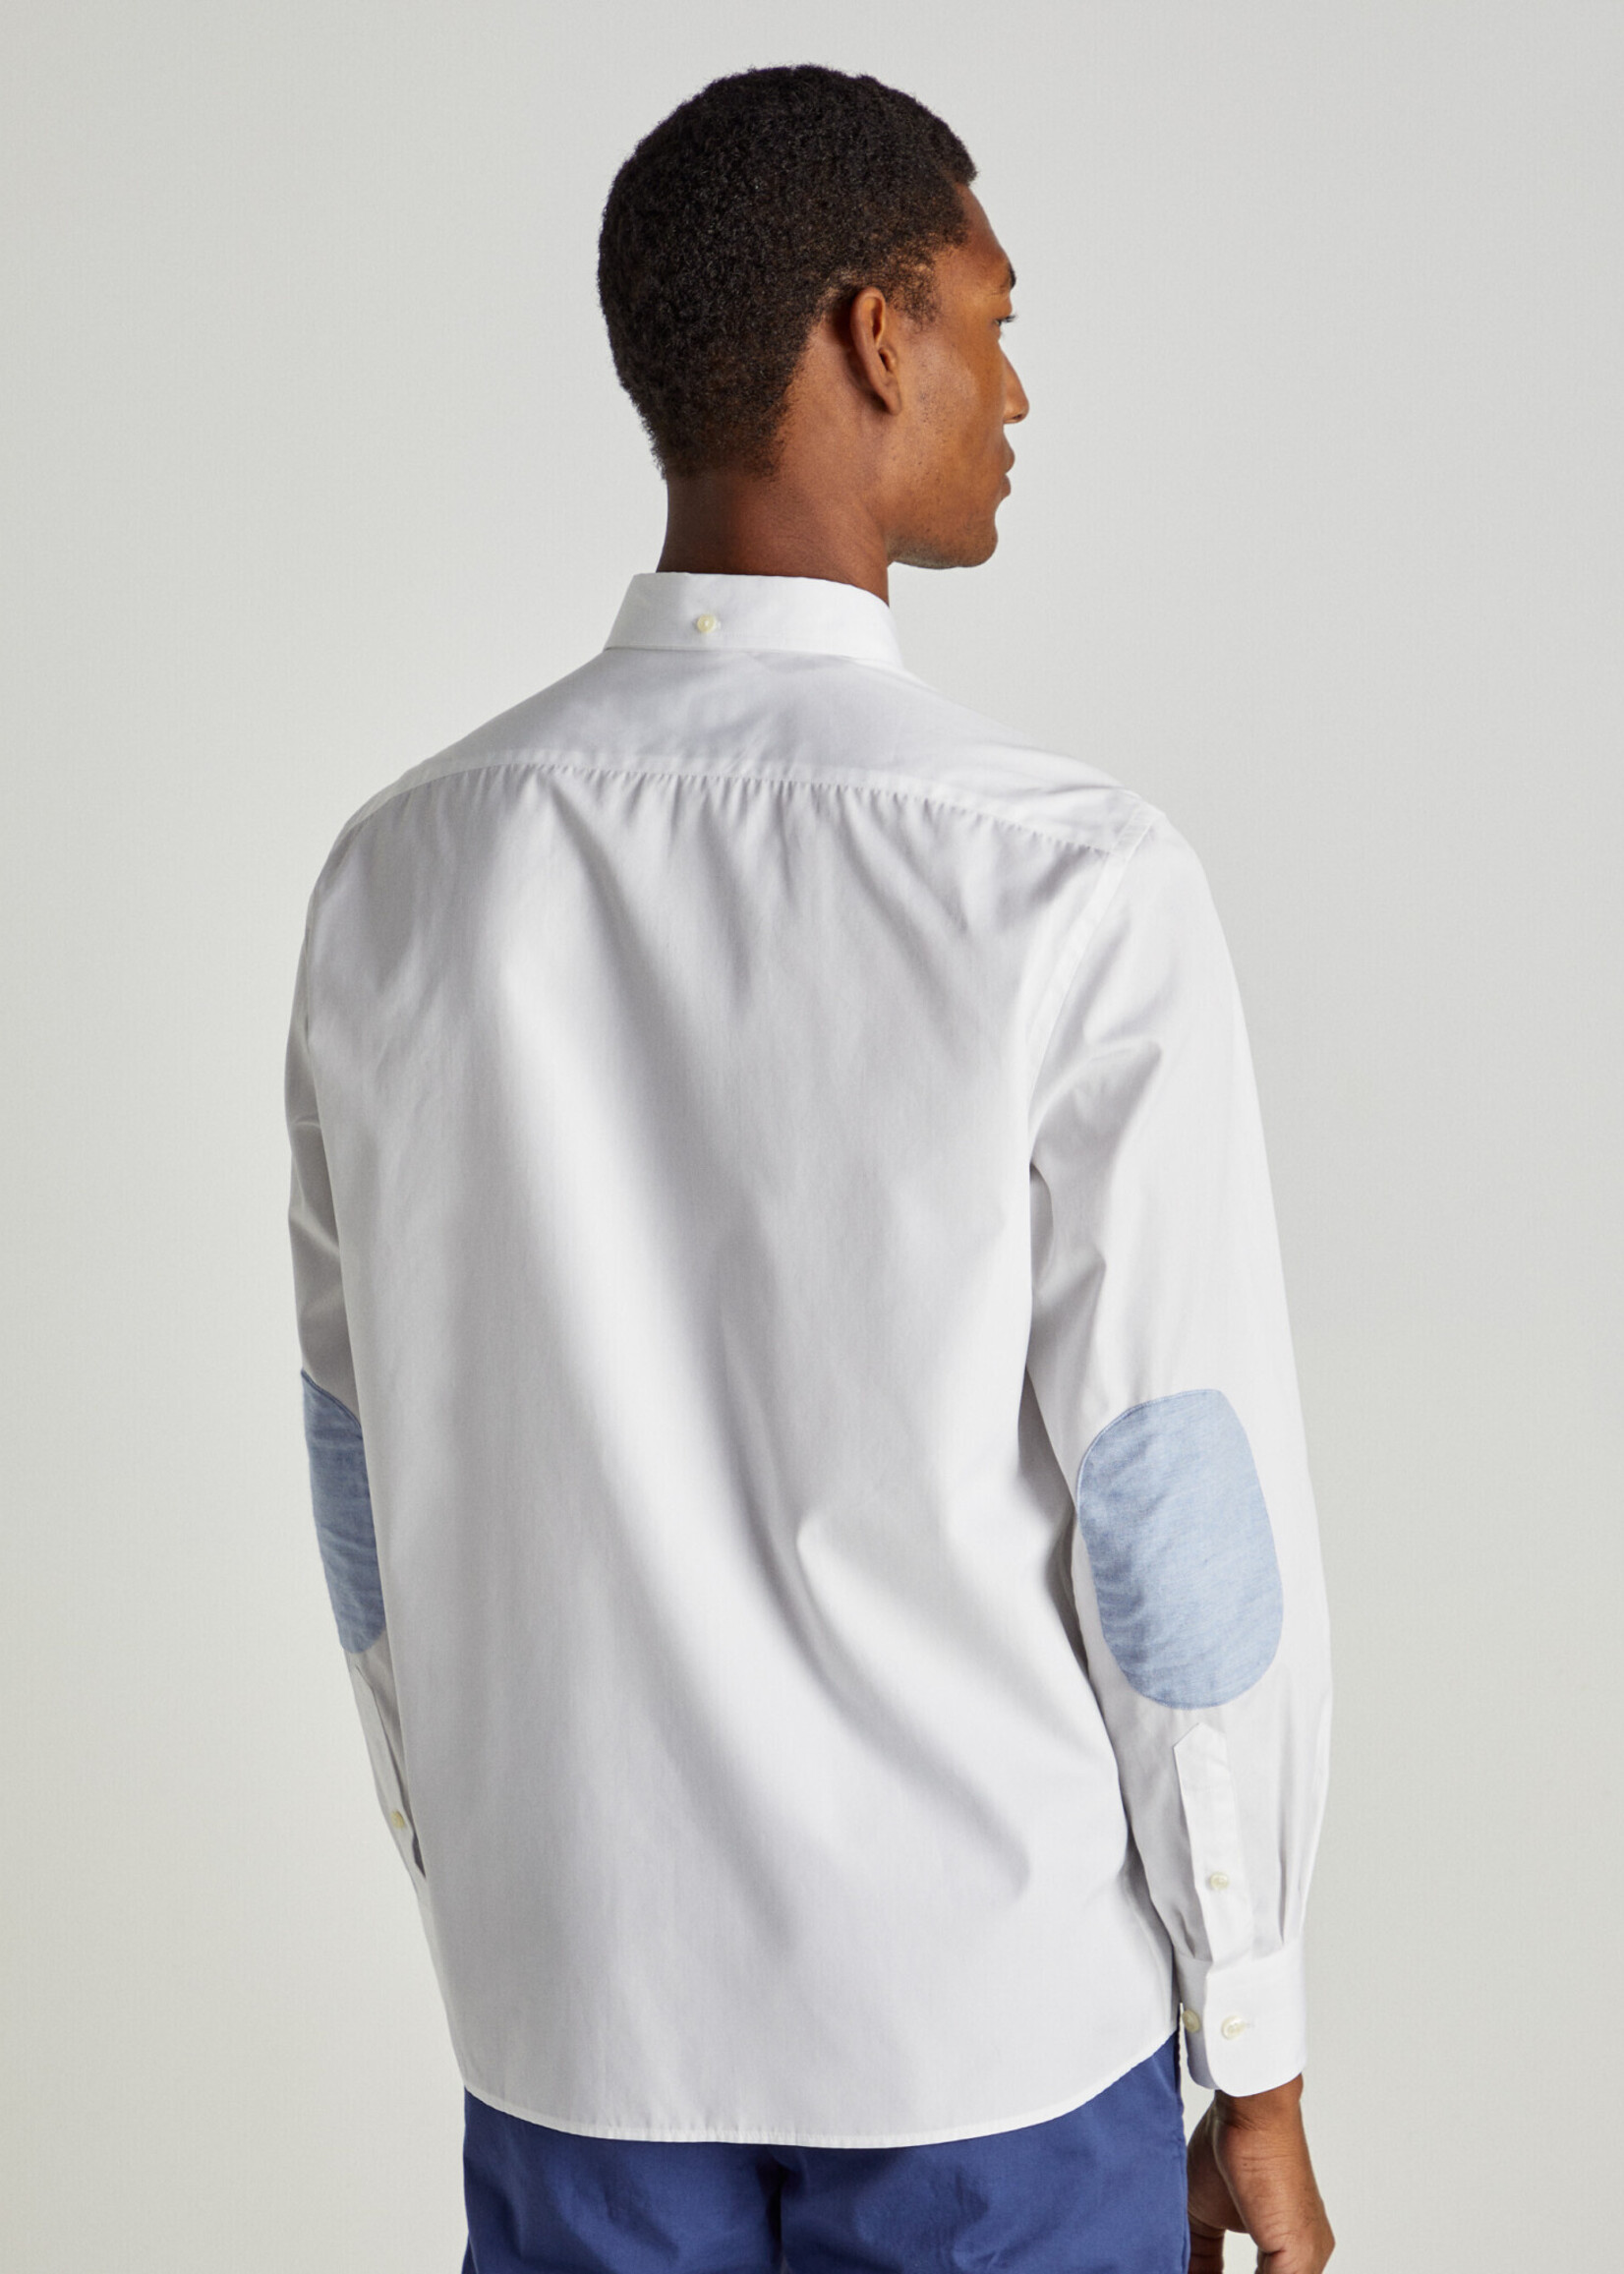 FAÇONNABLE Popeline overhemd met elleboogpatches - White/blue